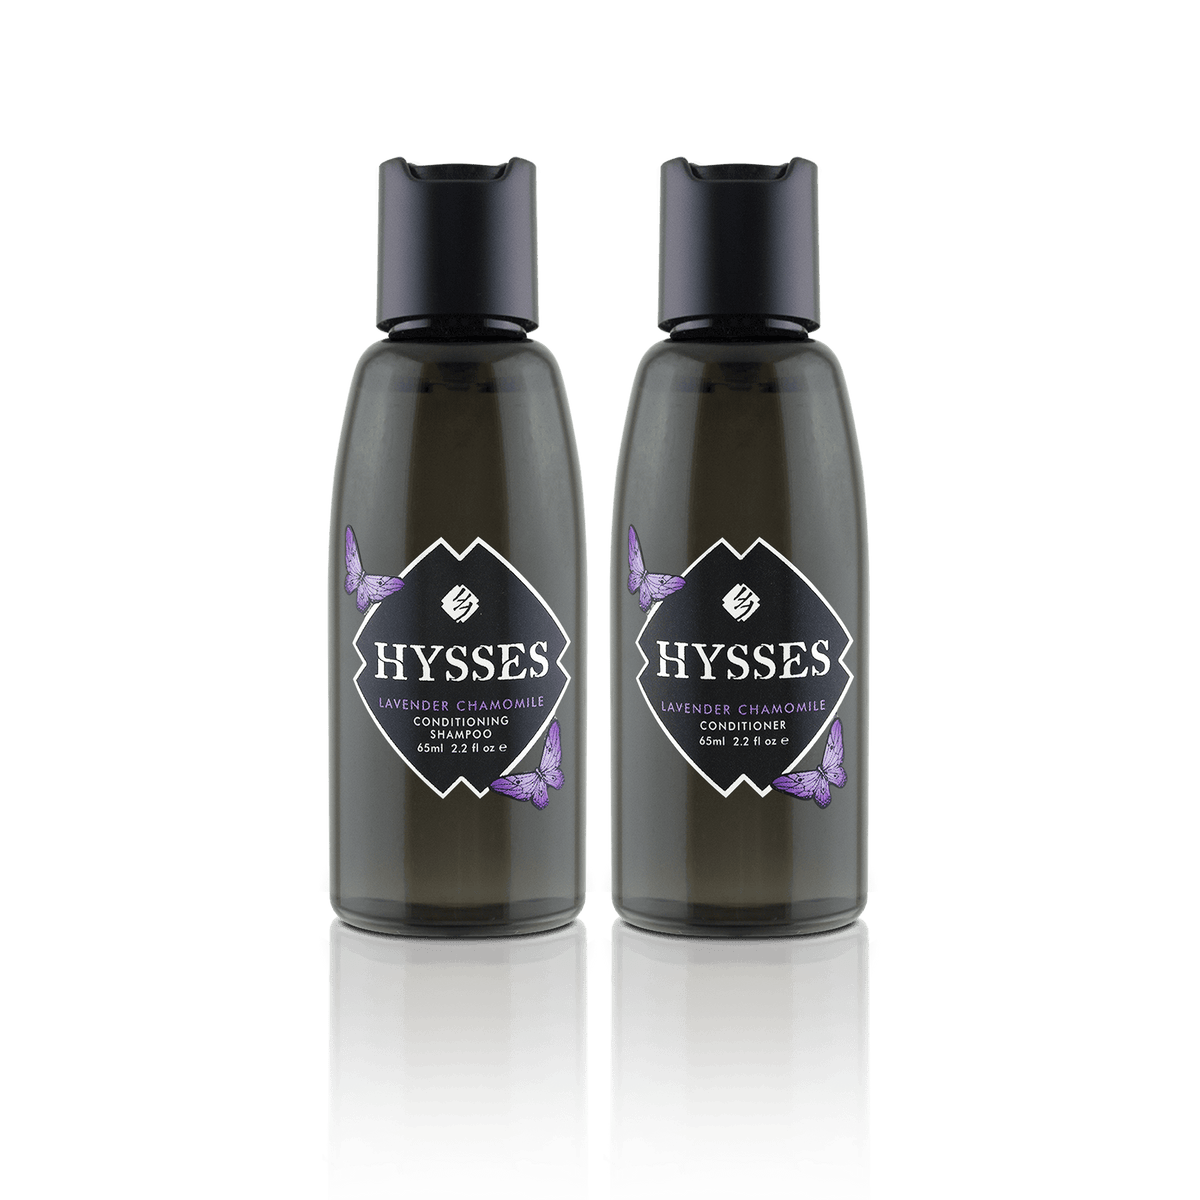 Hysses Hair Care Travel Gift Set (Shampoo &amp; Conditioner) Lavender Chamomile, 65ml